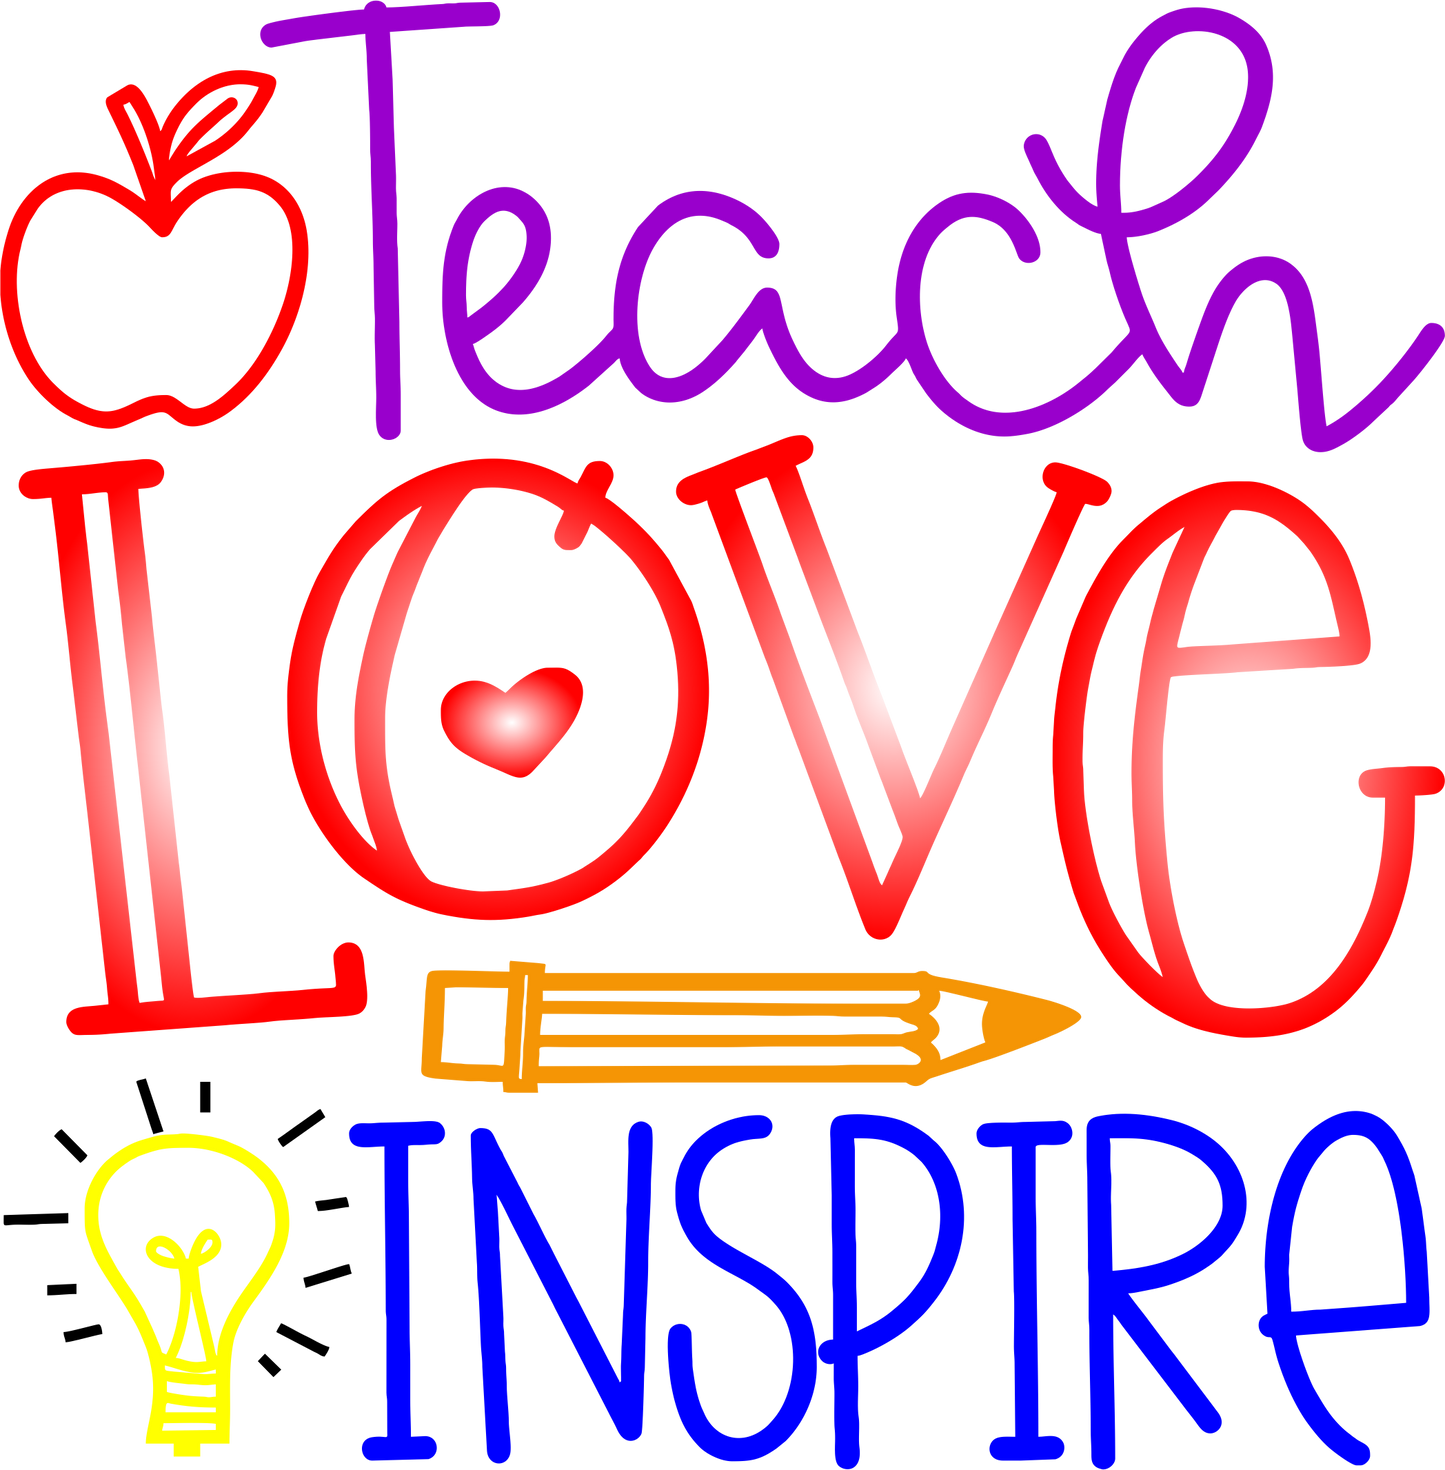 Teach Love Inspire - 6957